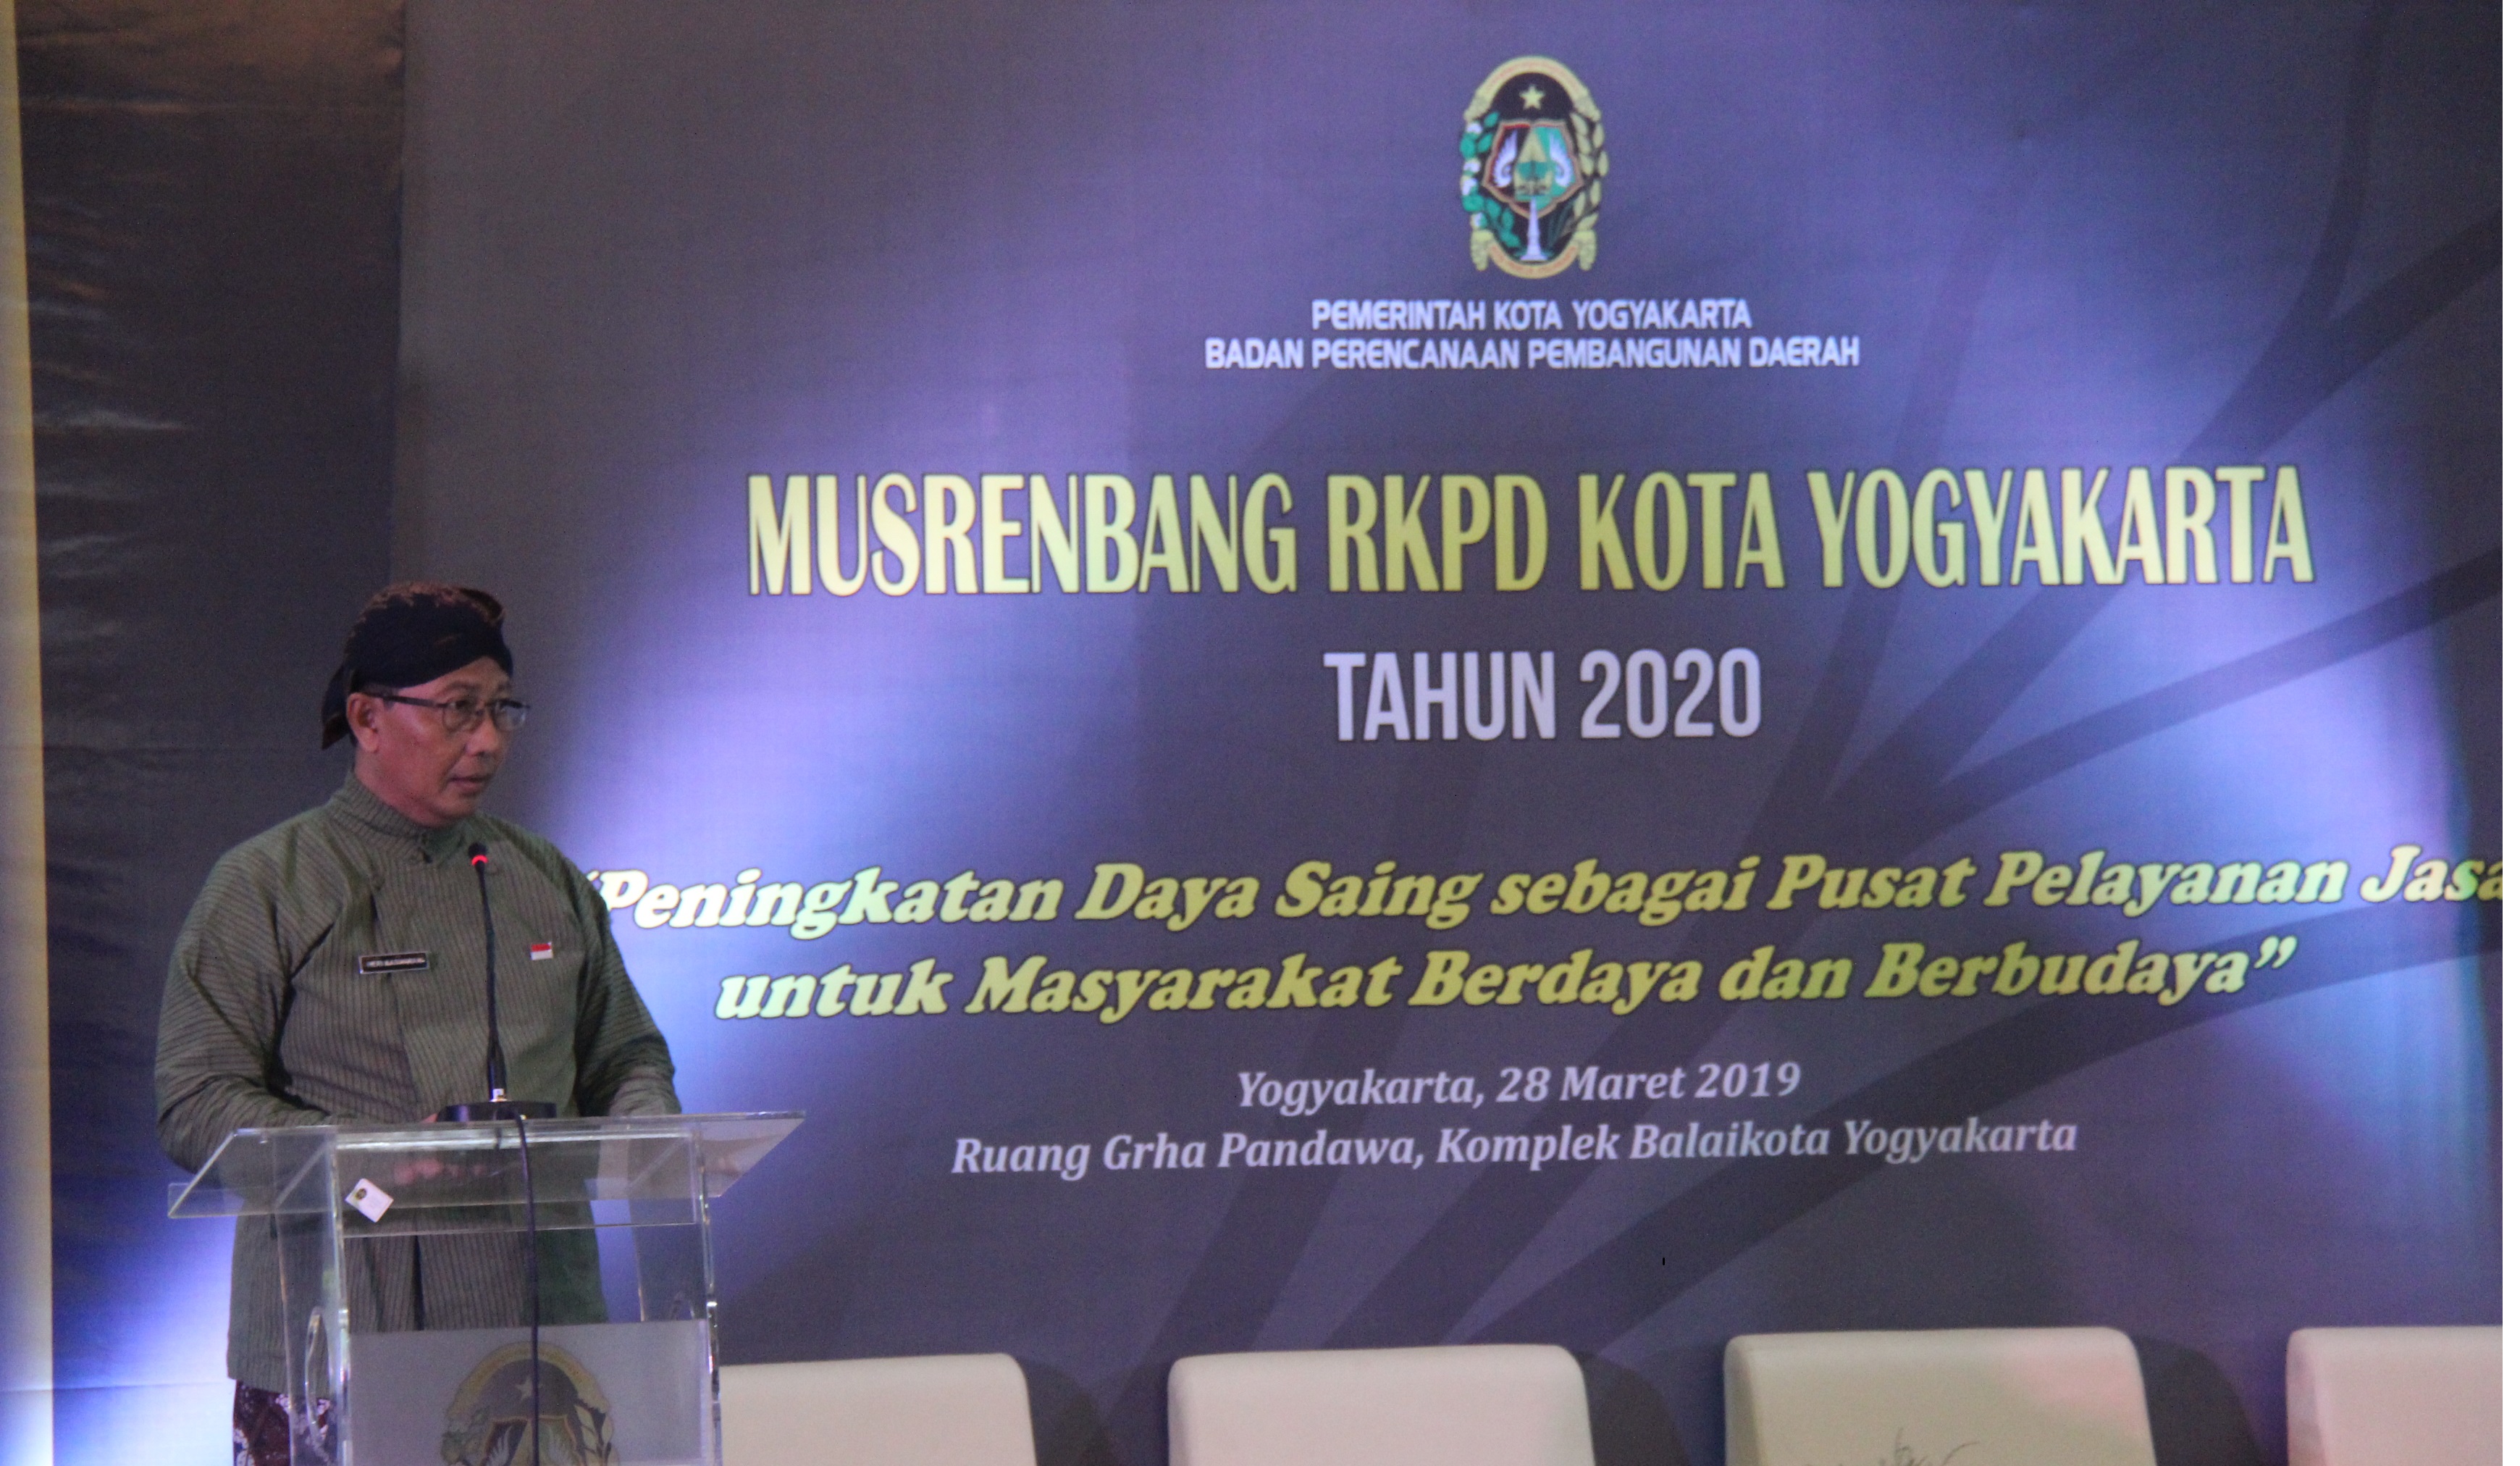 Musrenbang RKPD Kota Yogyakarta tahun 2020